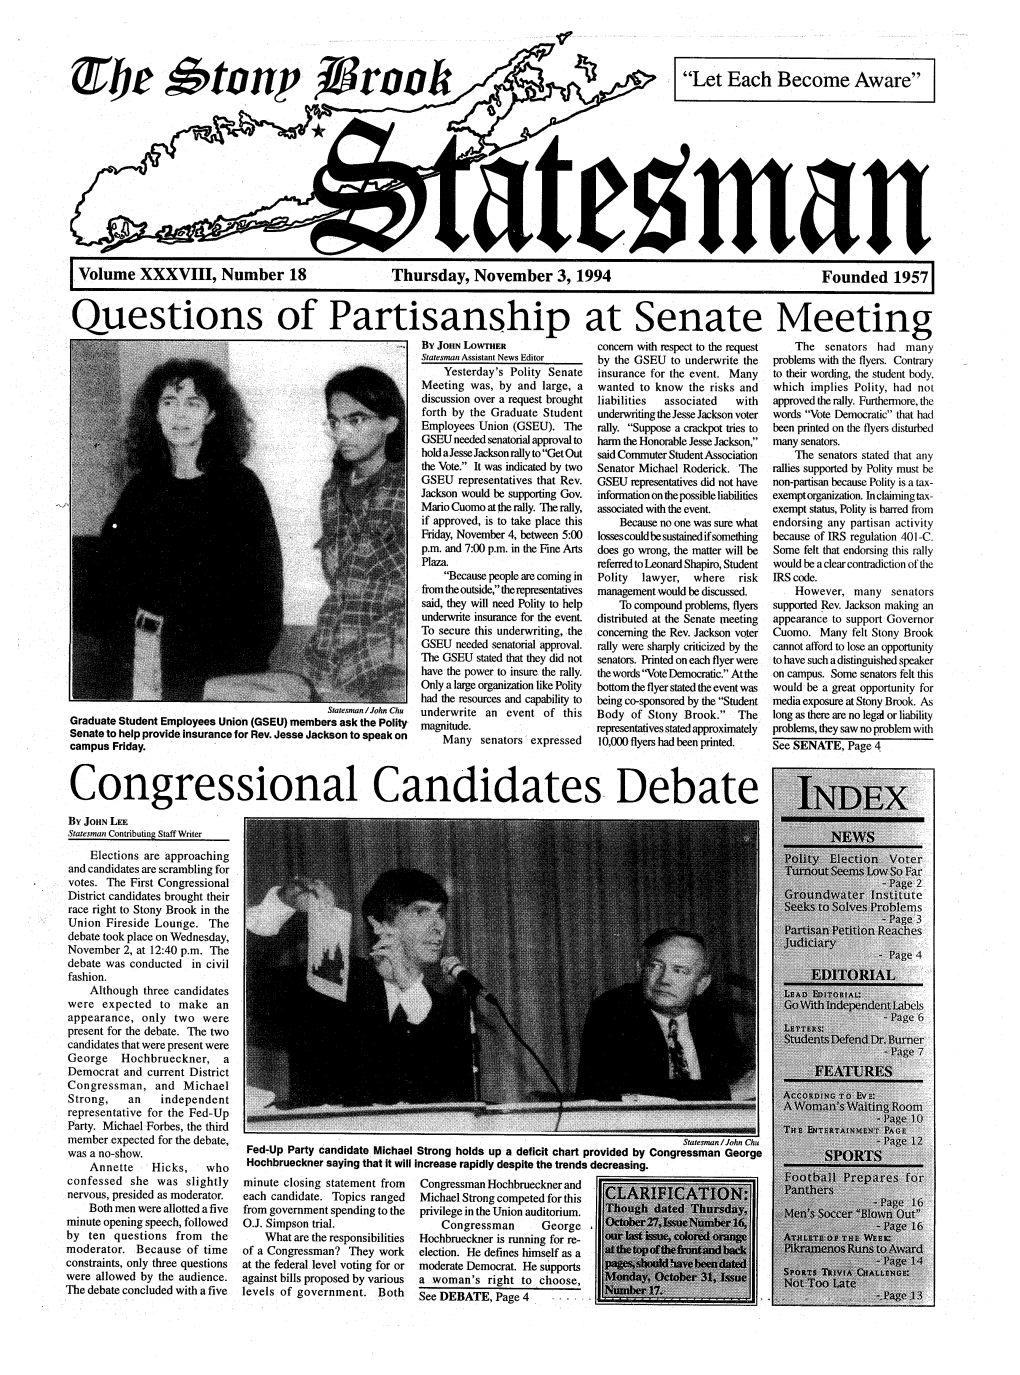 Congressional Candidates D~Ebate by JOHN LEE Statesman Contributing Staff Writer